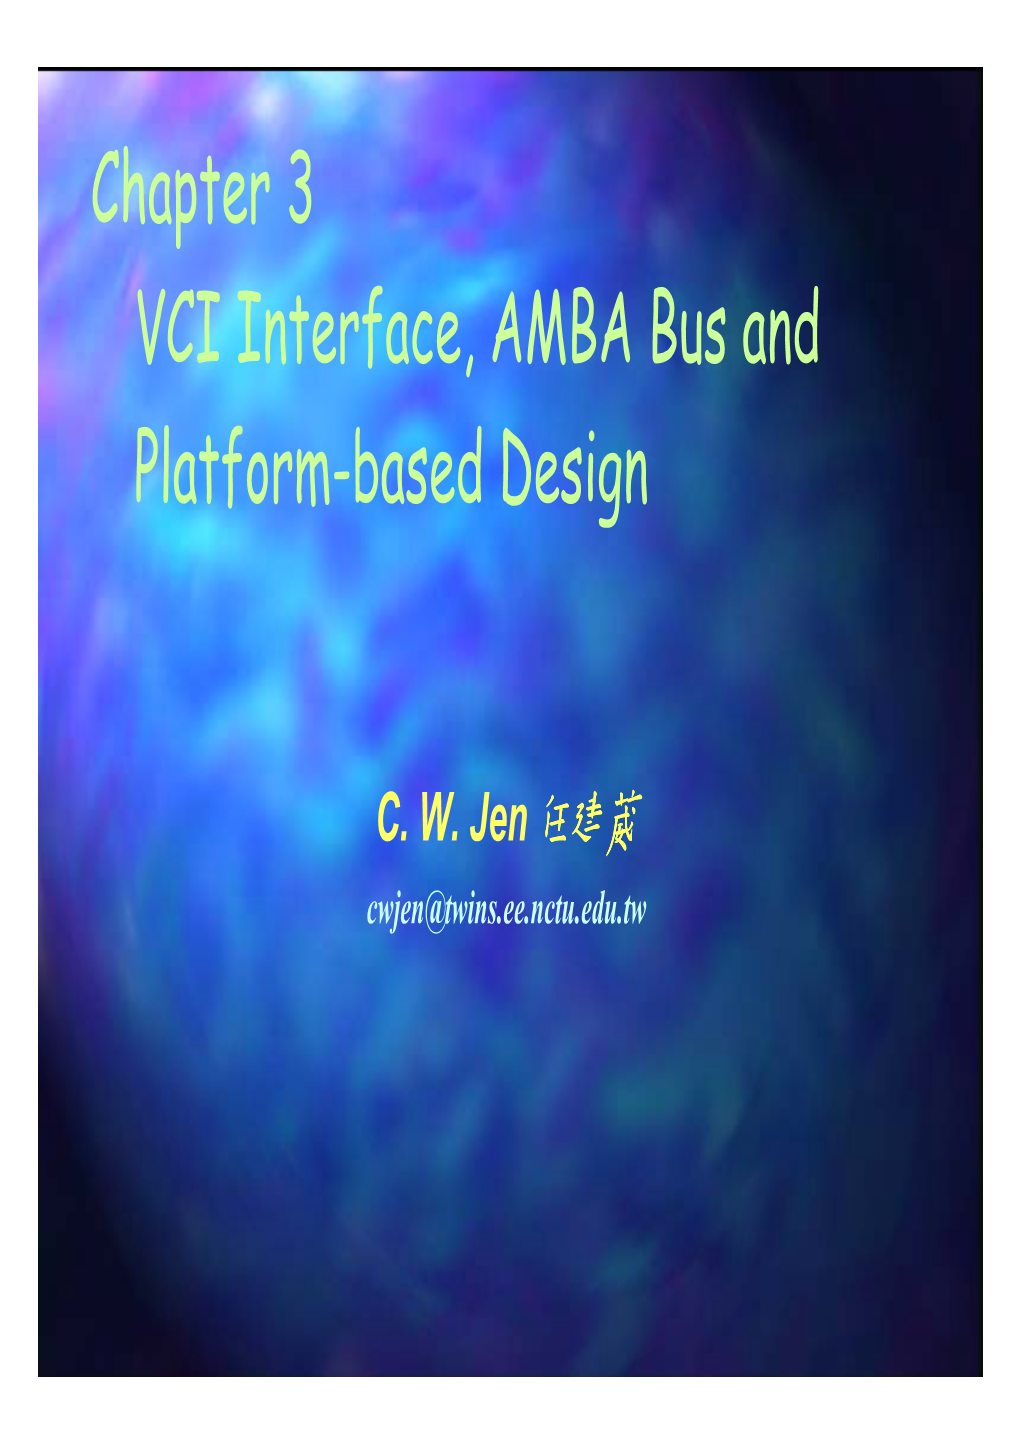 Chapter 3 VCI Interface, AMBA Bus and Platform-Based Design